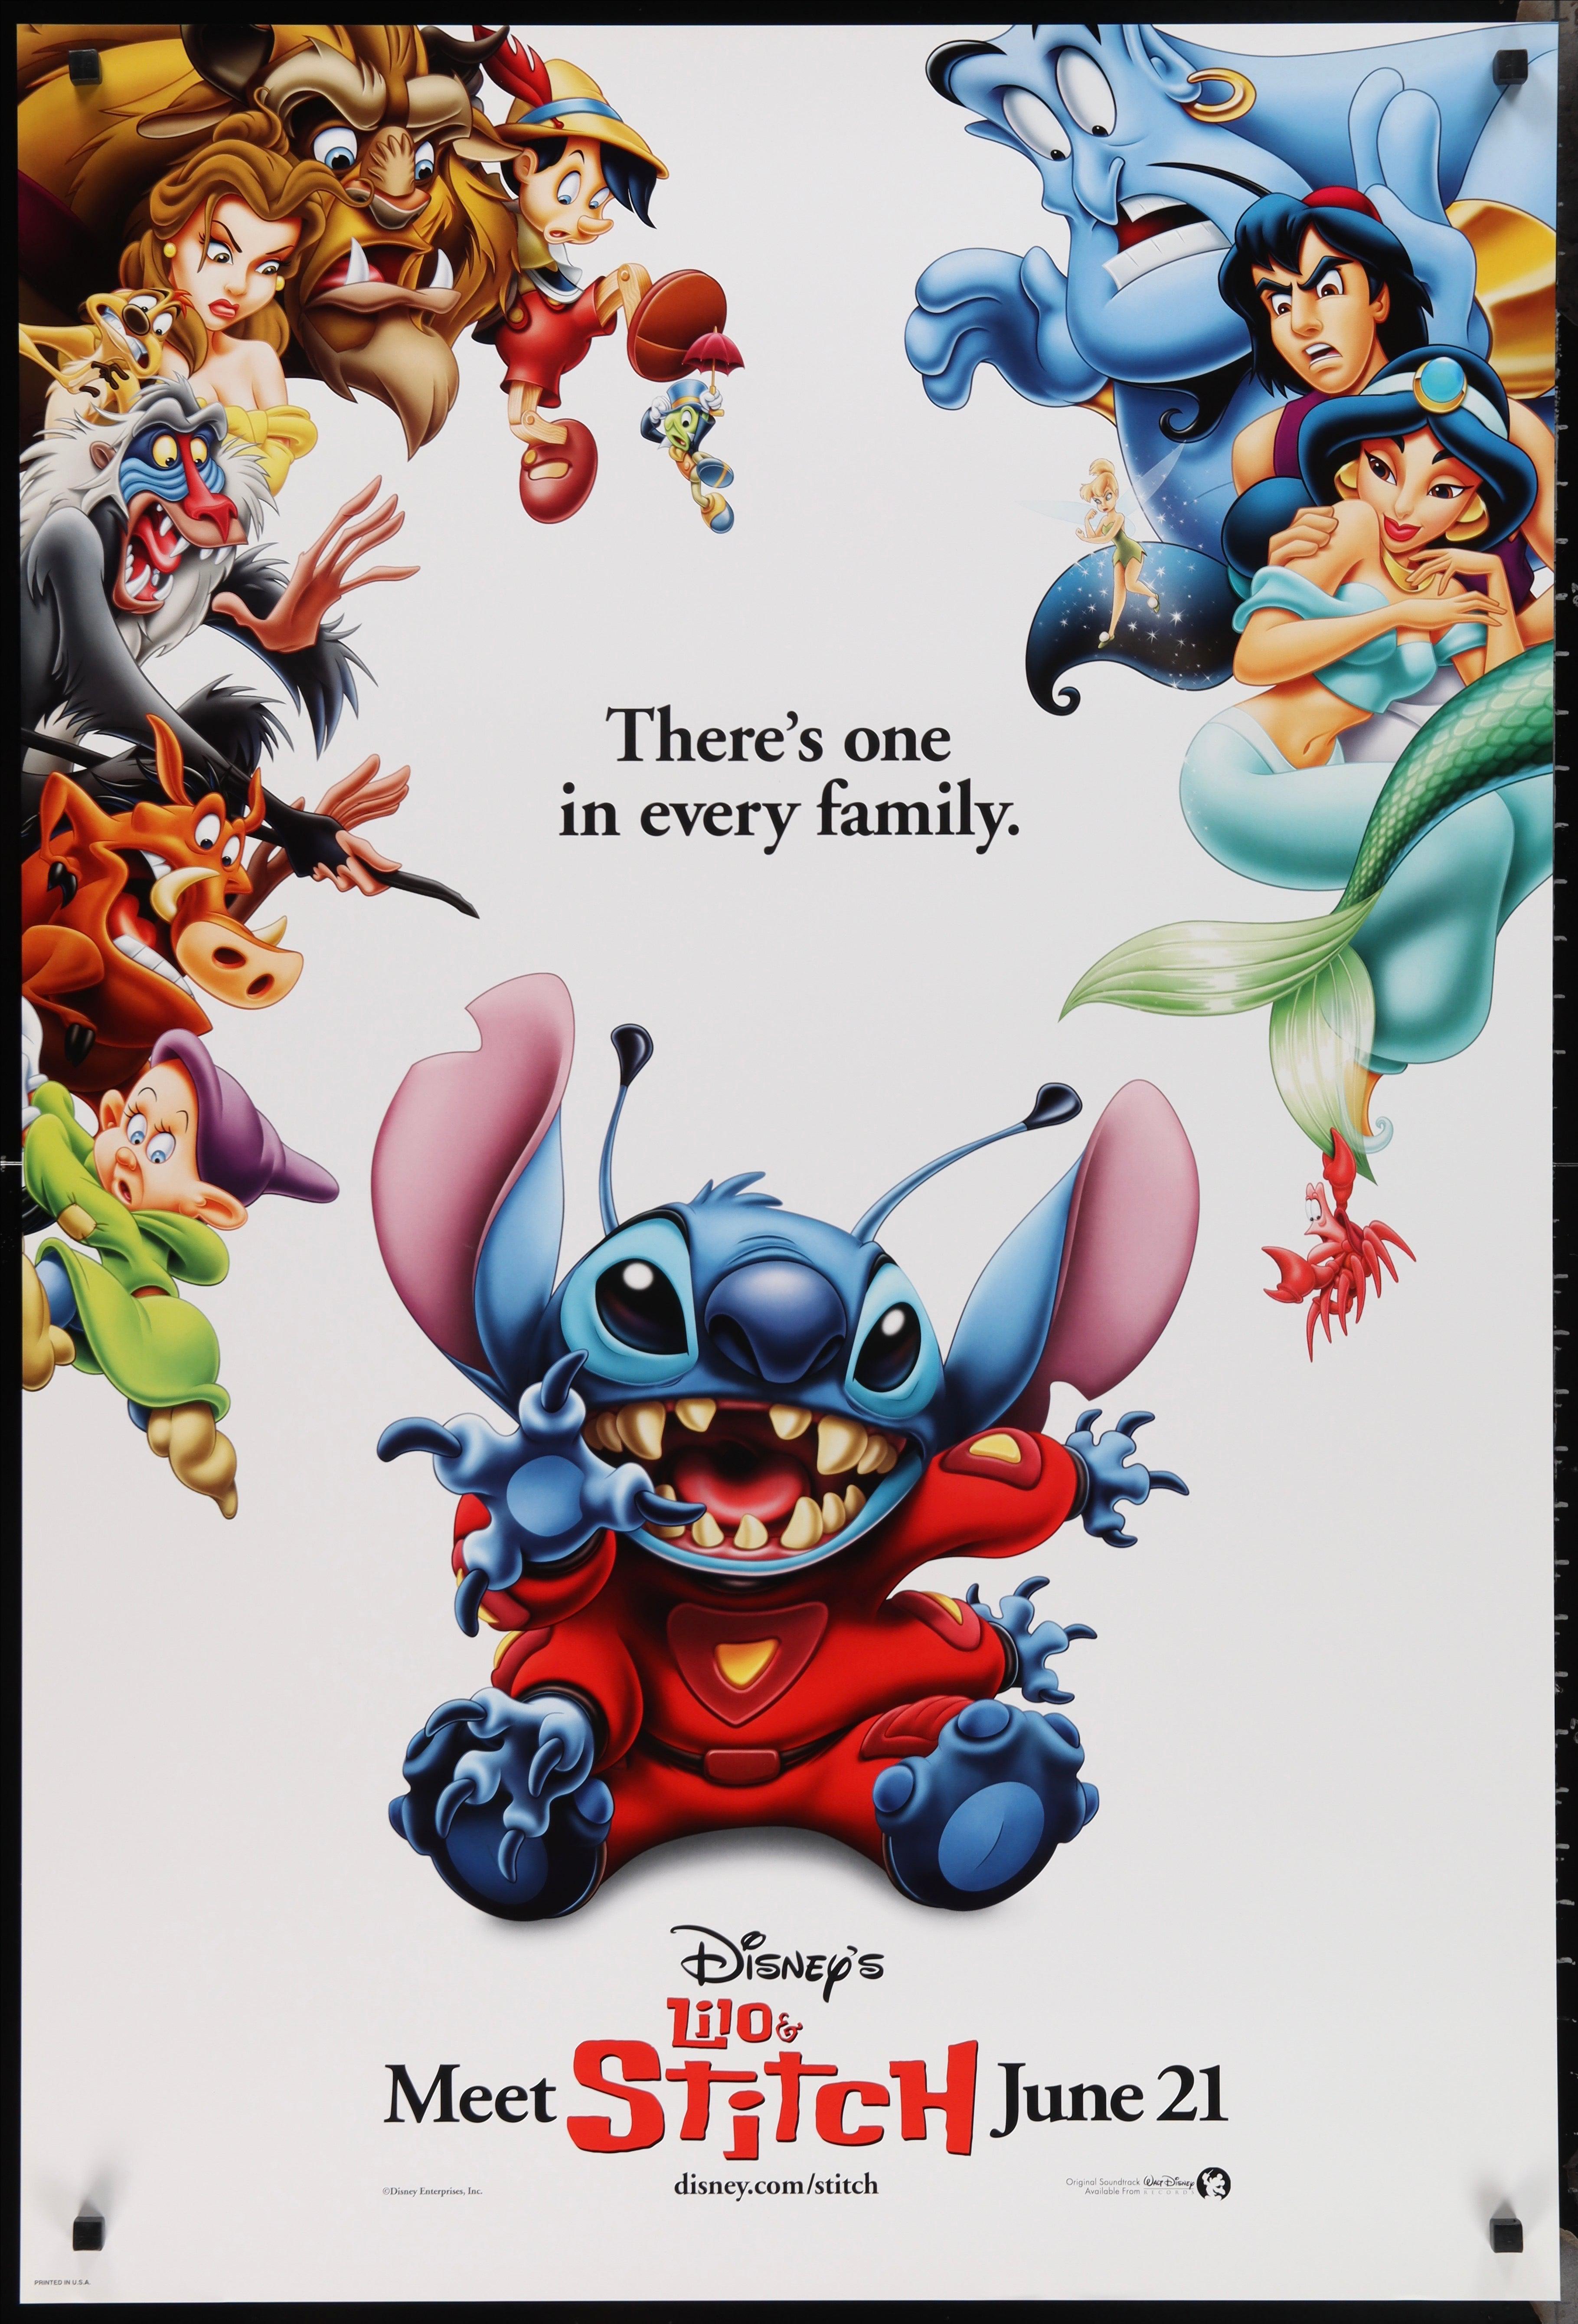 NEW Genuine Lilo & Stitch Collection Card Disney Animation Cartoon